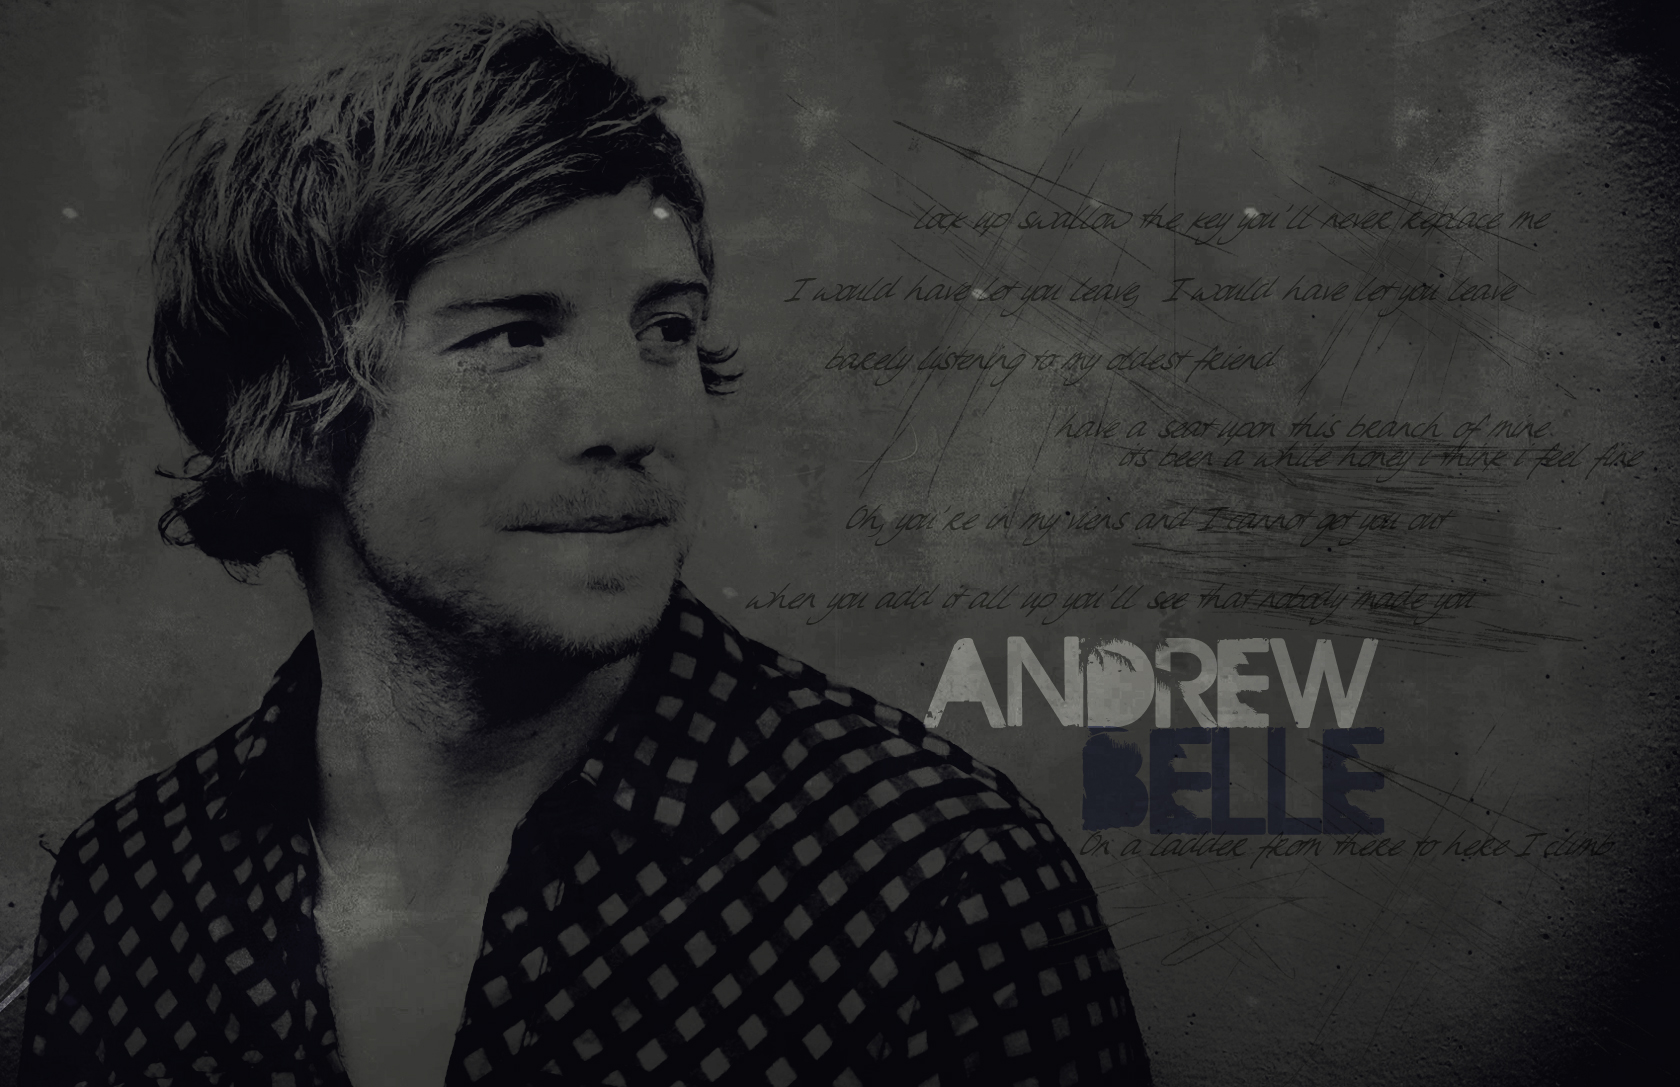 Andrew Belle